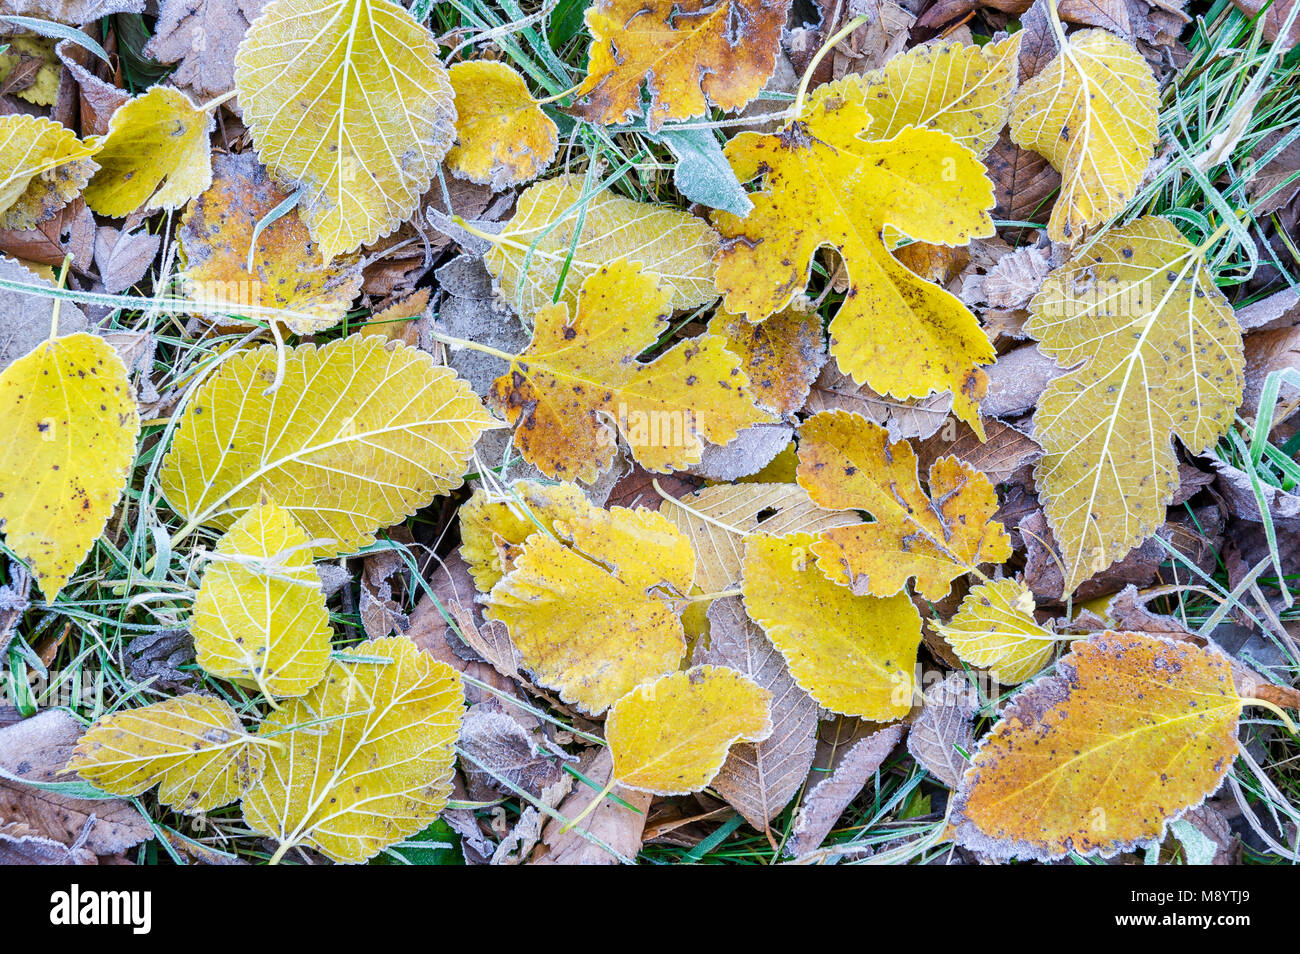 Frosted Bigtooth Aspen & Maulbeerblättern, späten Herbst Fort Snelling SP, MN, USA, von Dominique Braud/Dembinsky Foto Assoc Stockfoto